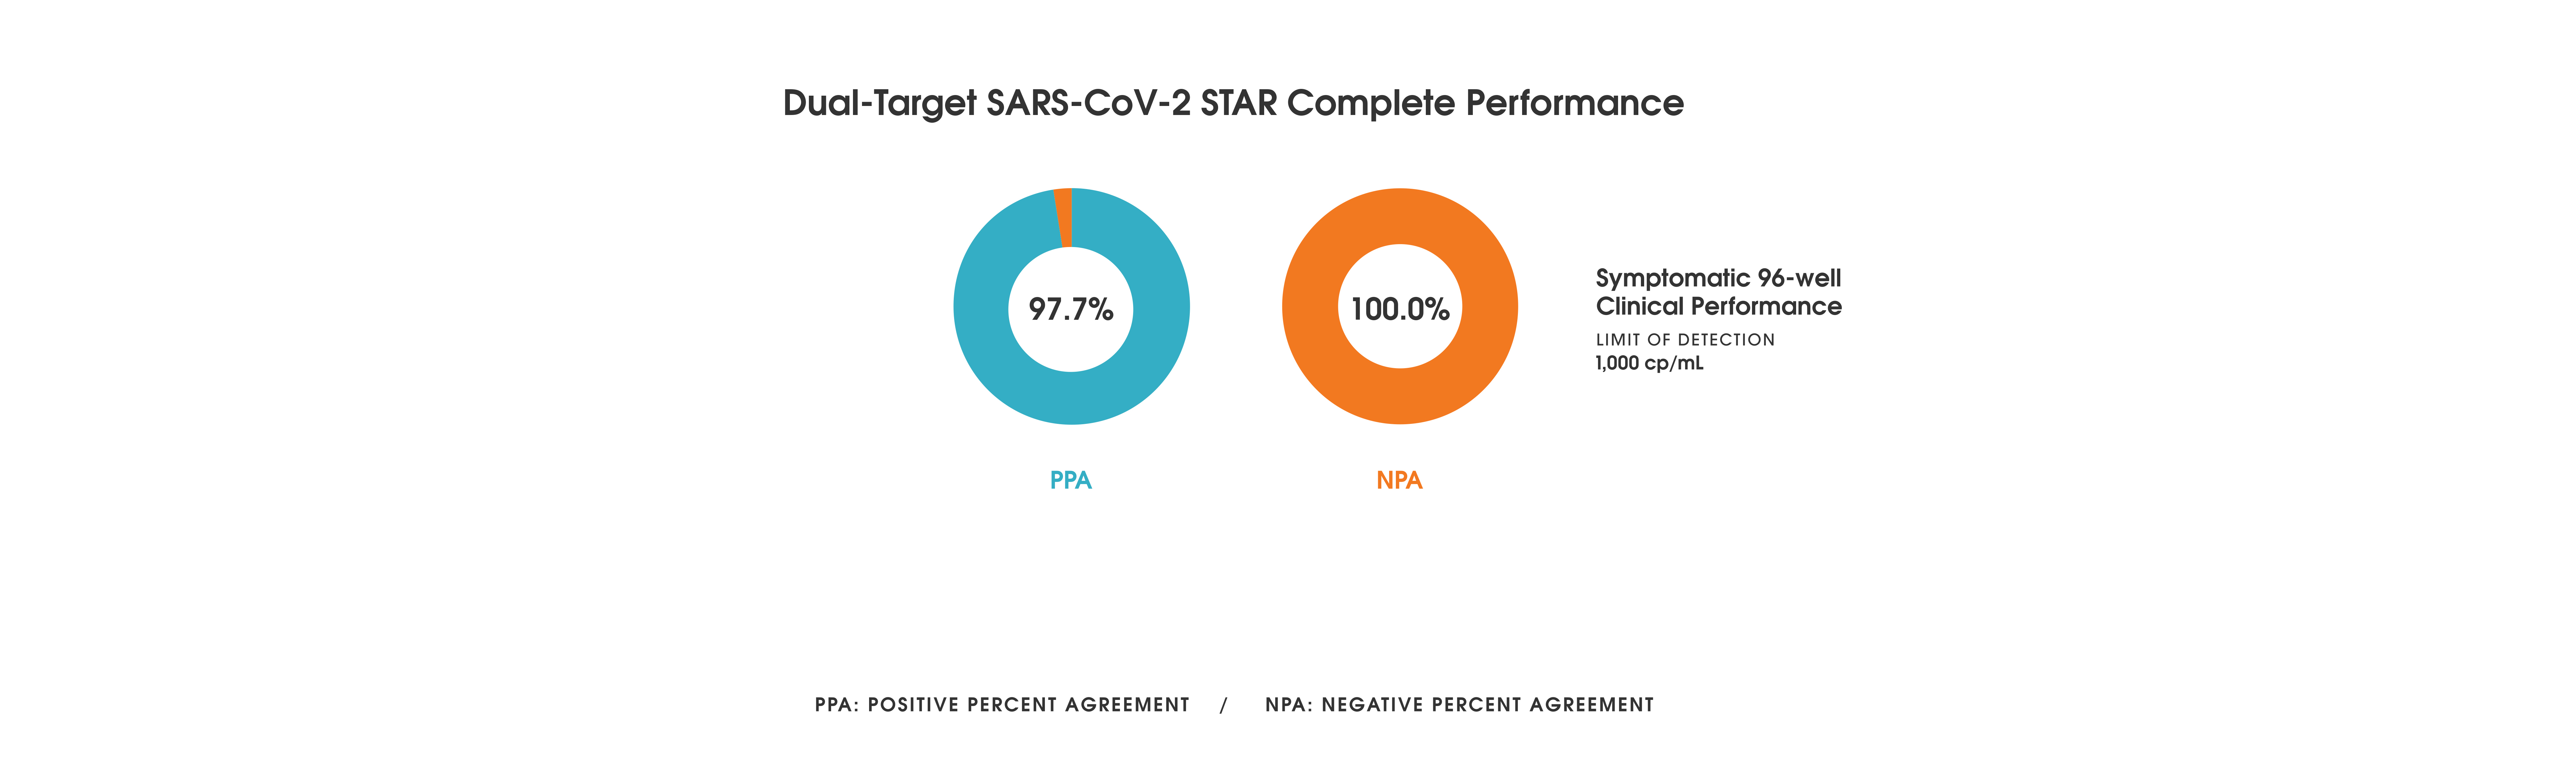 Dual-Target SARS-CoV-2 STAR Complete - Performance